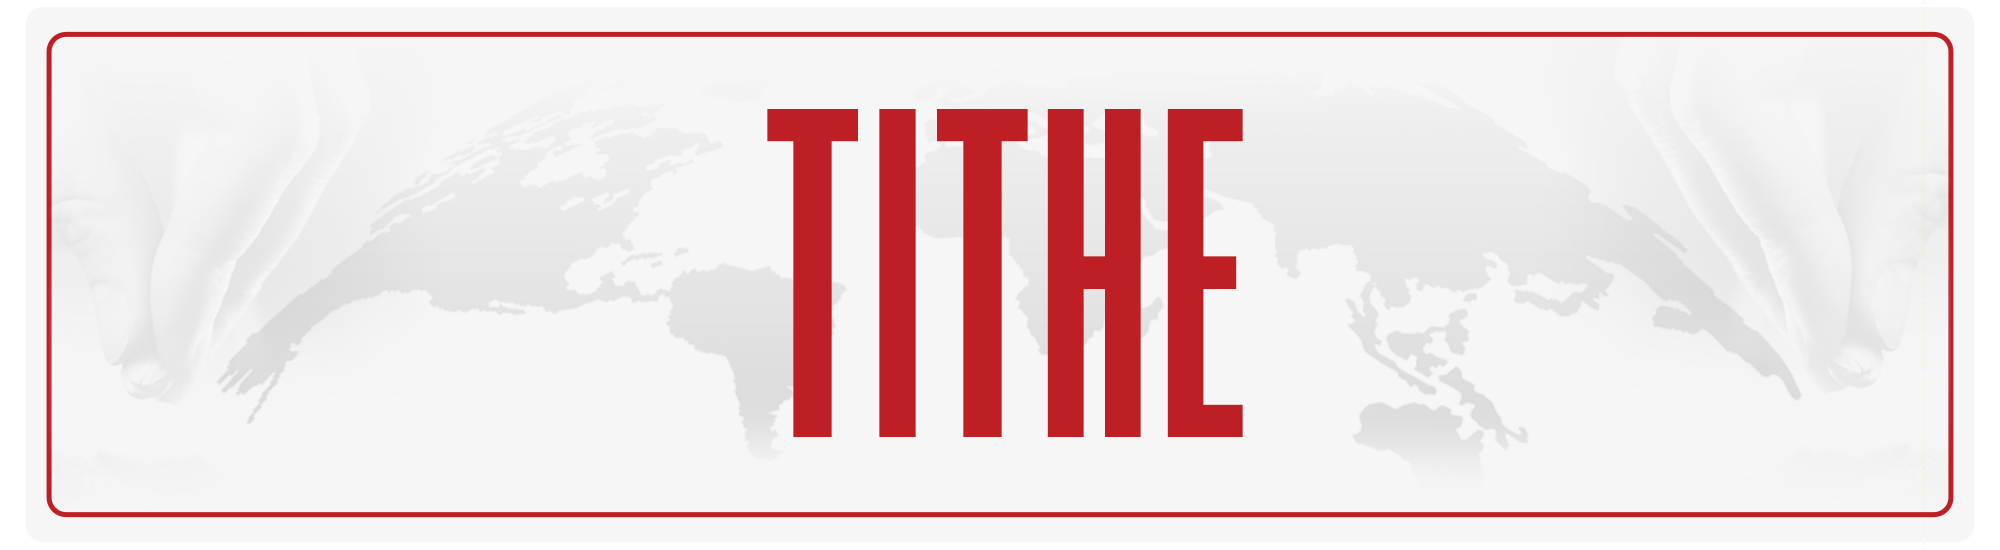 Tithe - Give Main Banner